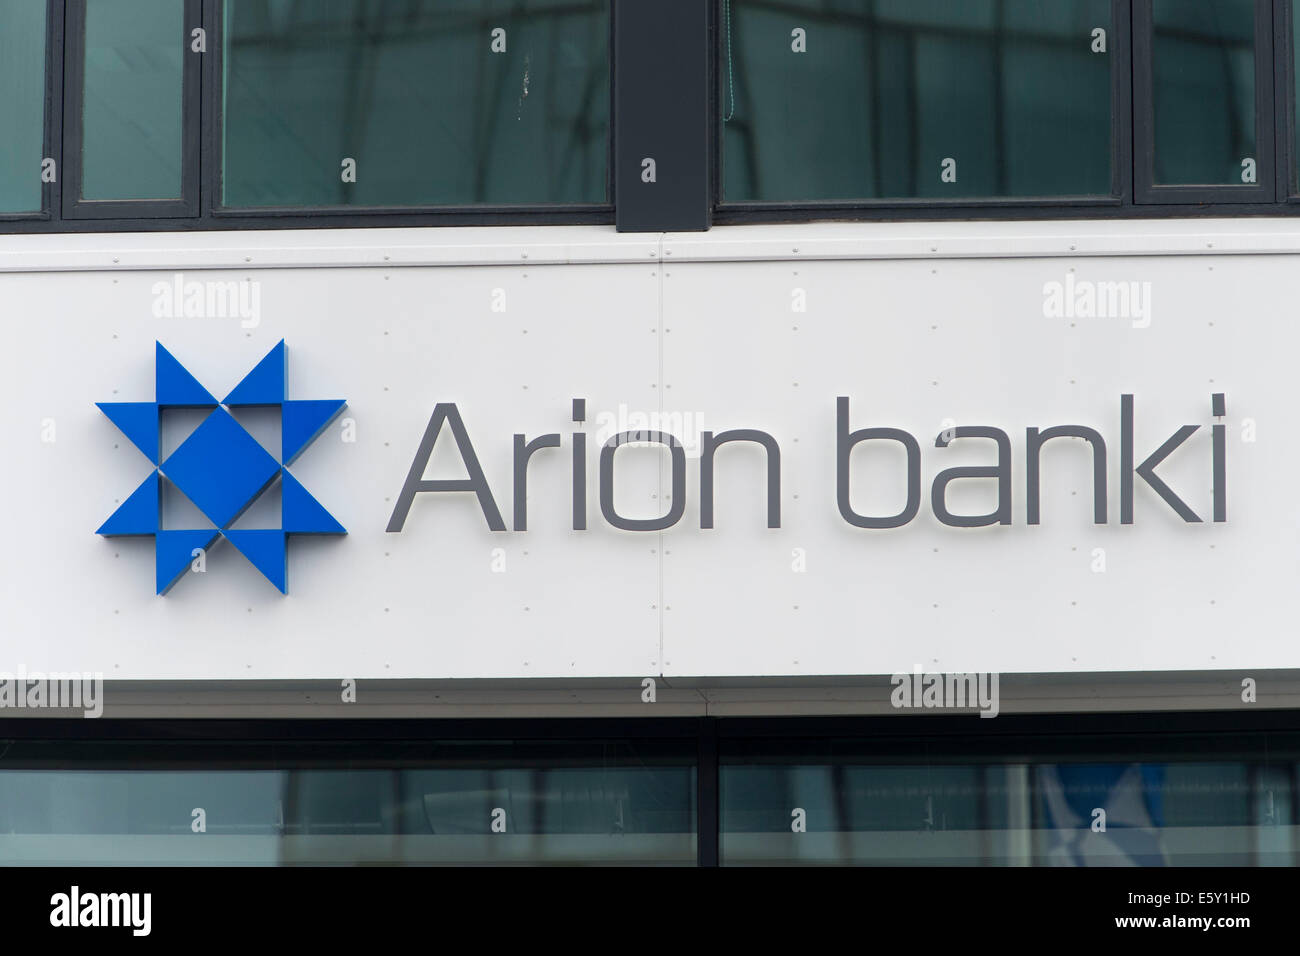 Arion banki sign in Reykjavik, Iceland Stock Photo - Alamy